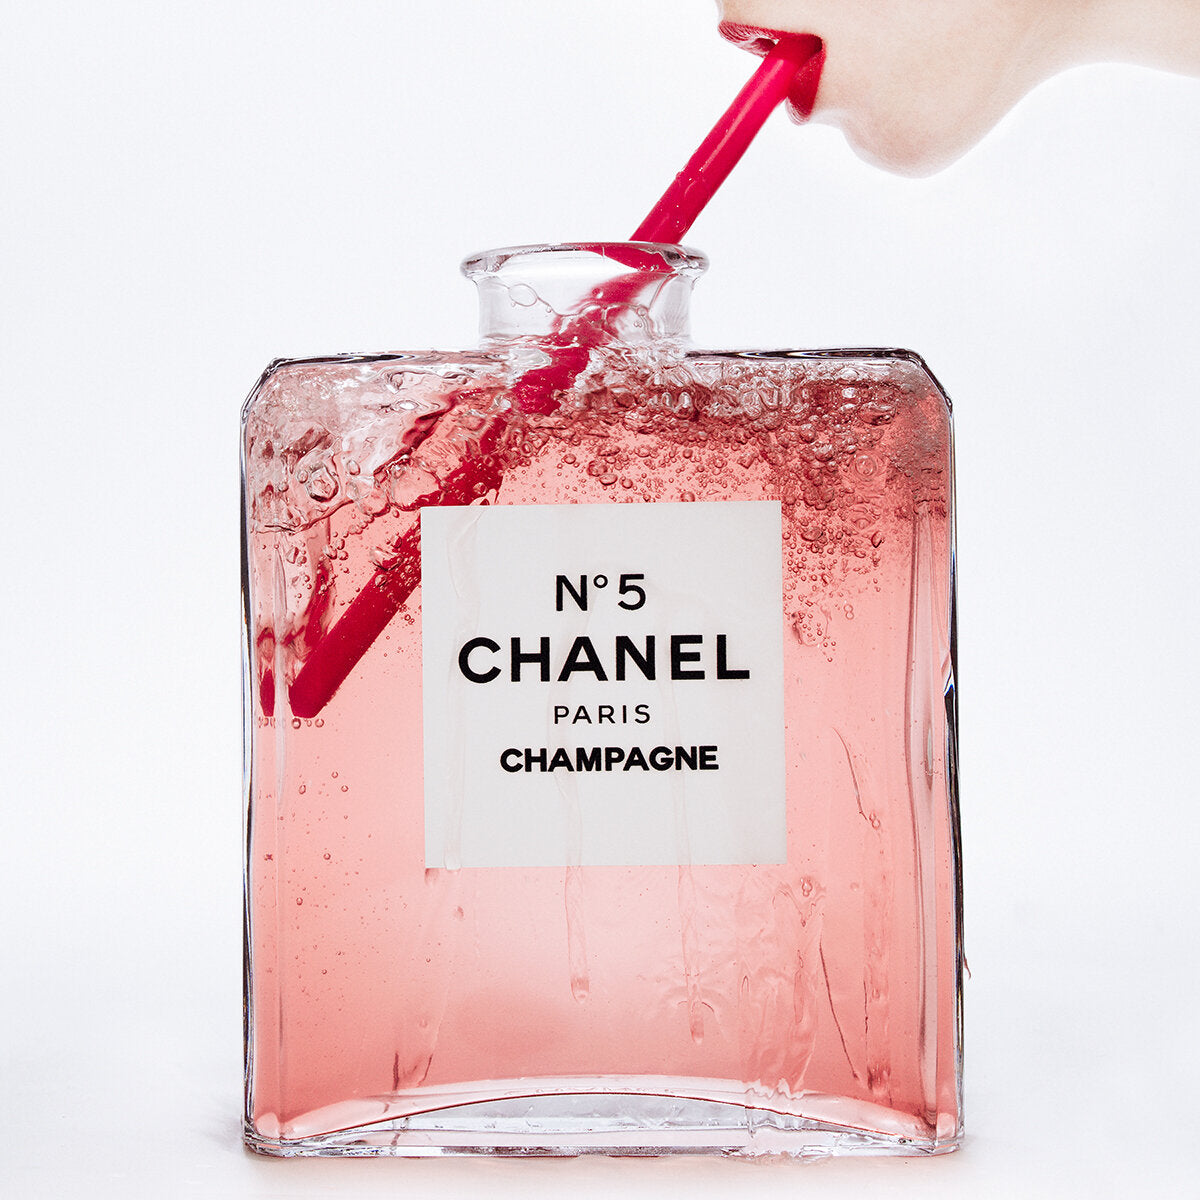  Chanel Champagne Tyler Shields